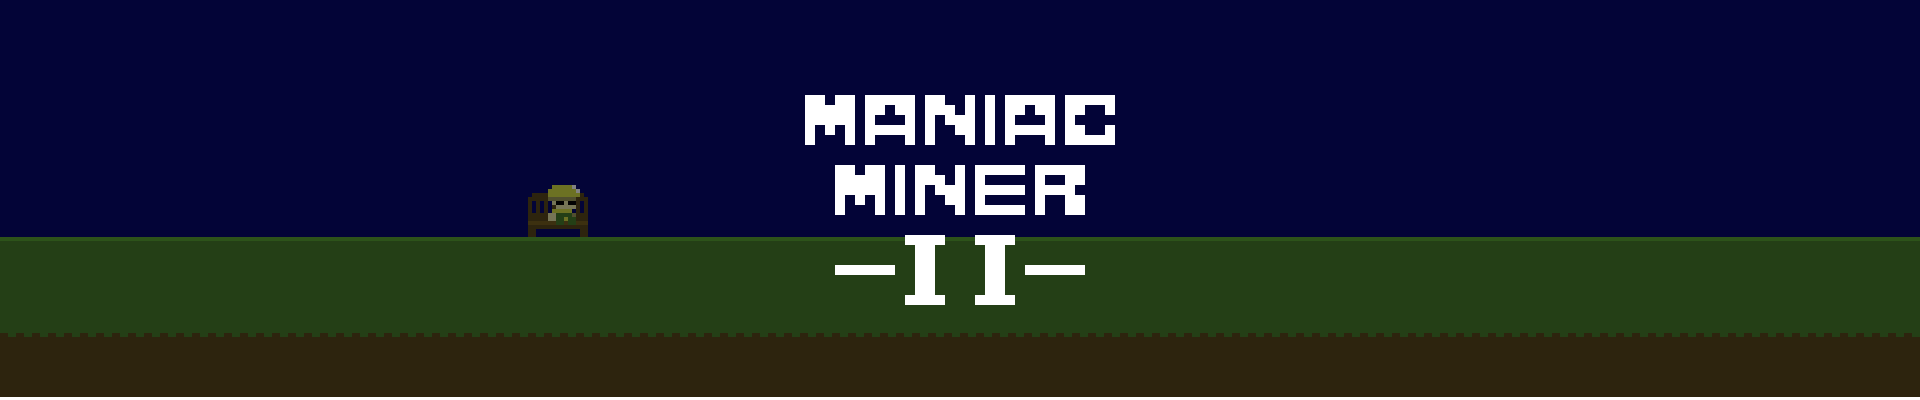 Maniac Miner II